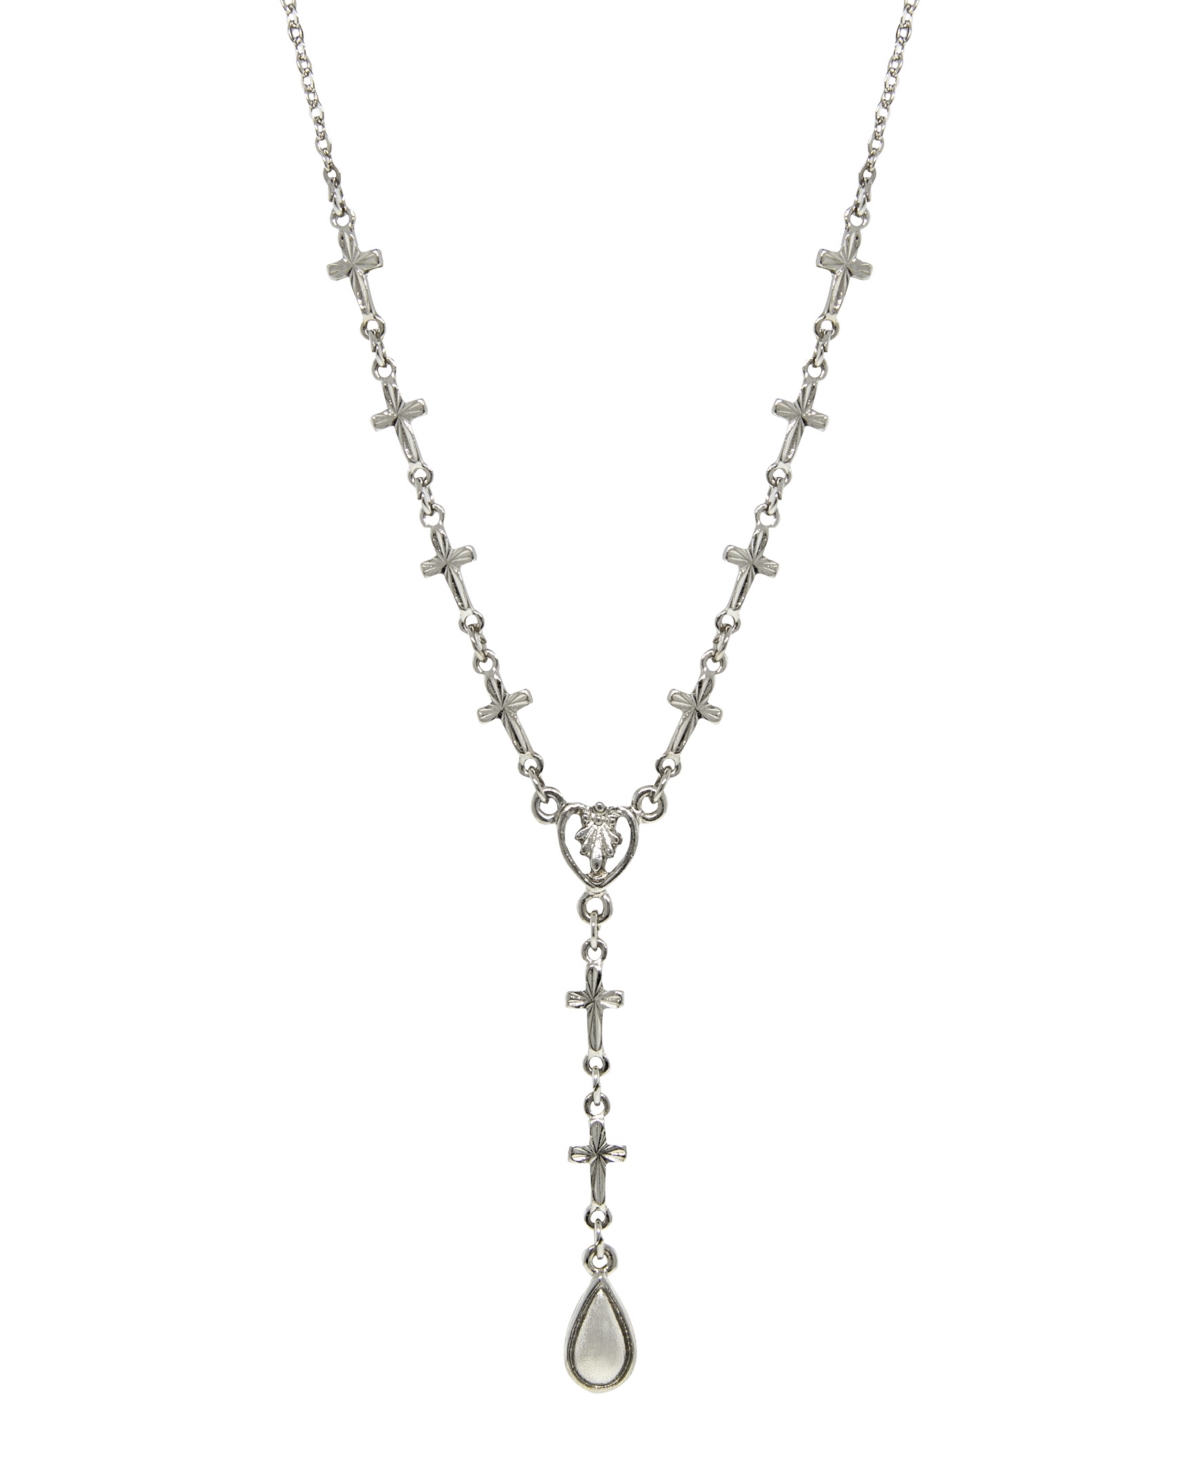 Silver-Tone Cross Chain Y-Necklace - Gray